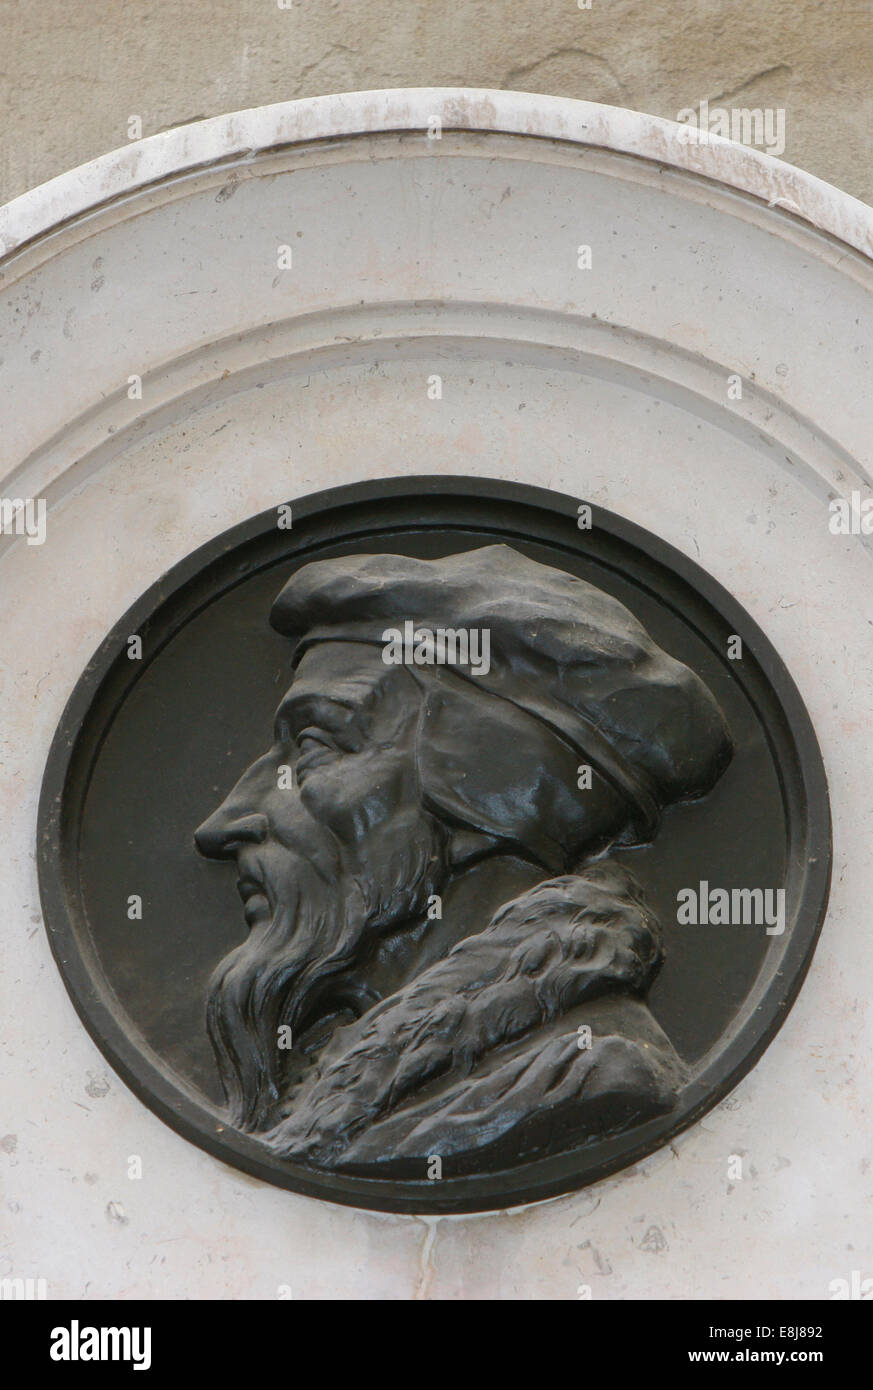 John Calvin - French reformer and theologian Stock Photo